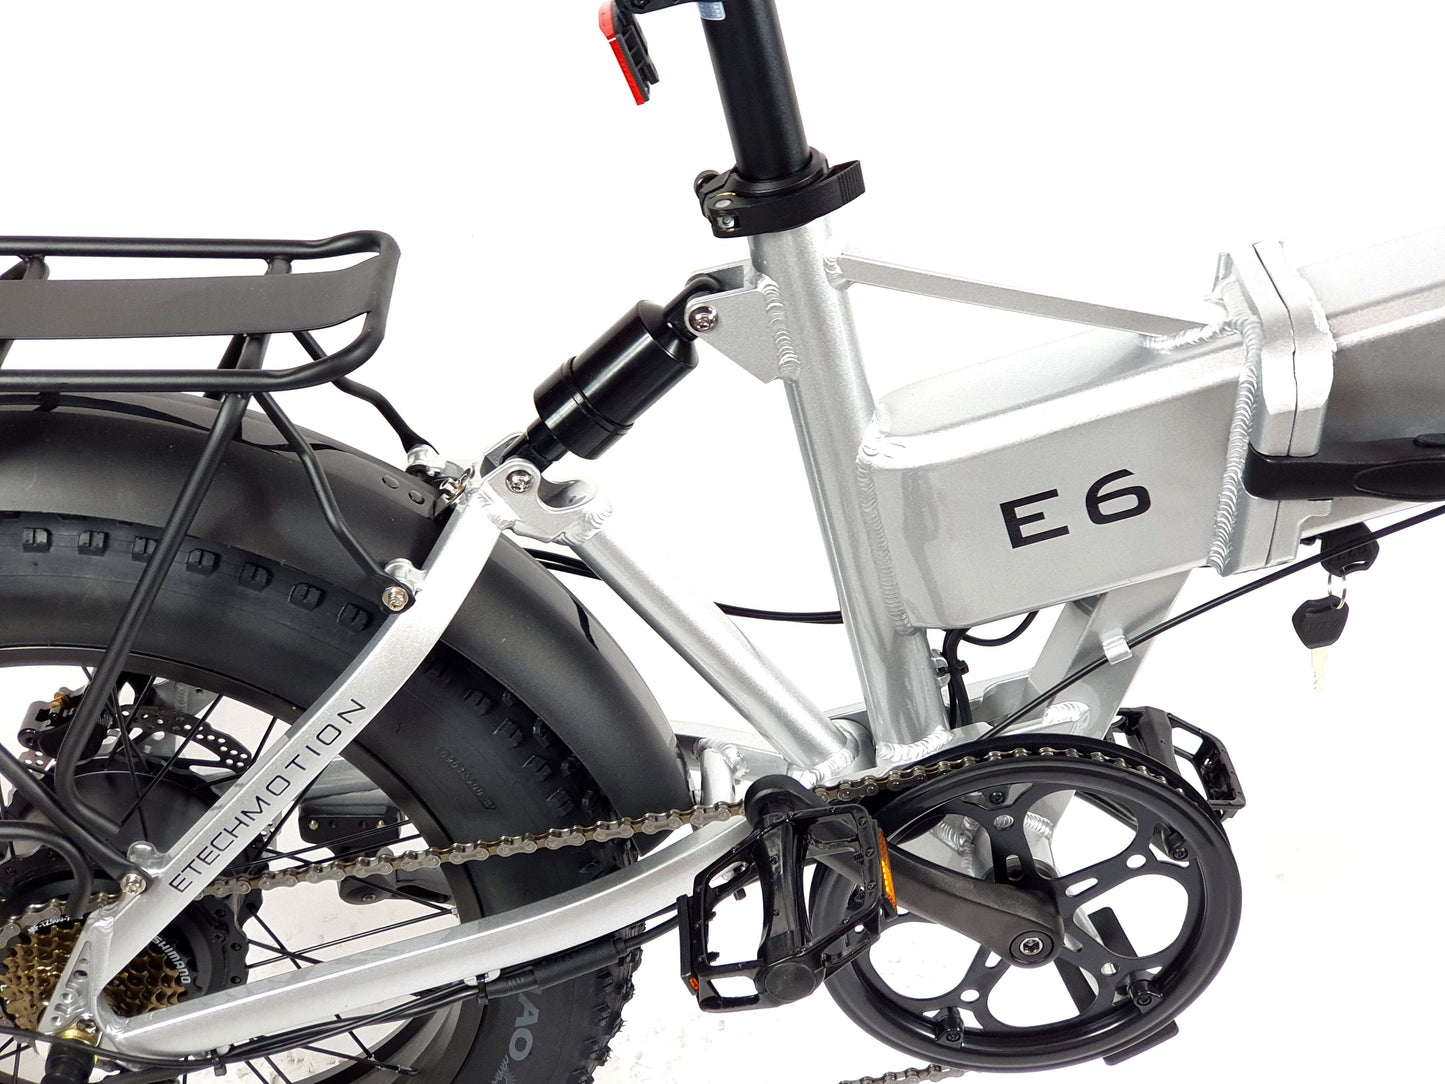 E6 Fat Tyre Electric Bike Panasonic 48V 960Wh Battery 800W Motor